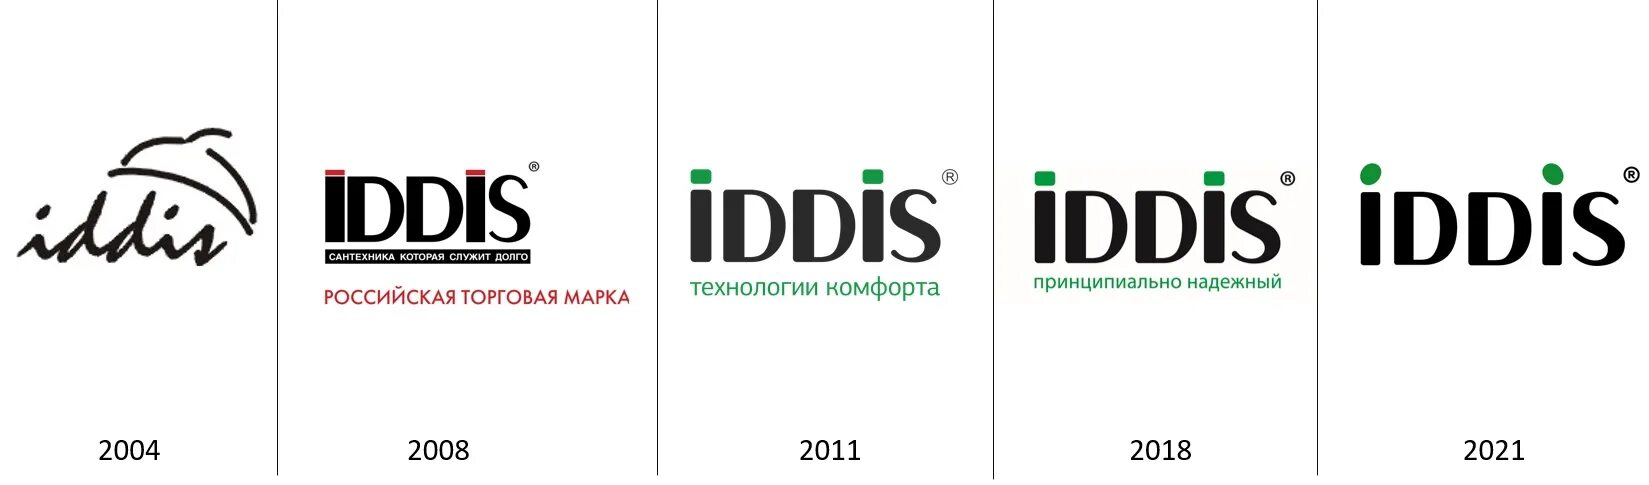 Сантехника IDDIS логотип. IDDIS SKL logo. IDDIS упаковка. IDDIS Official Store. Iddis сантехника сайт